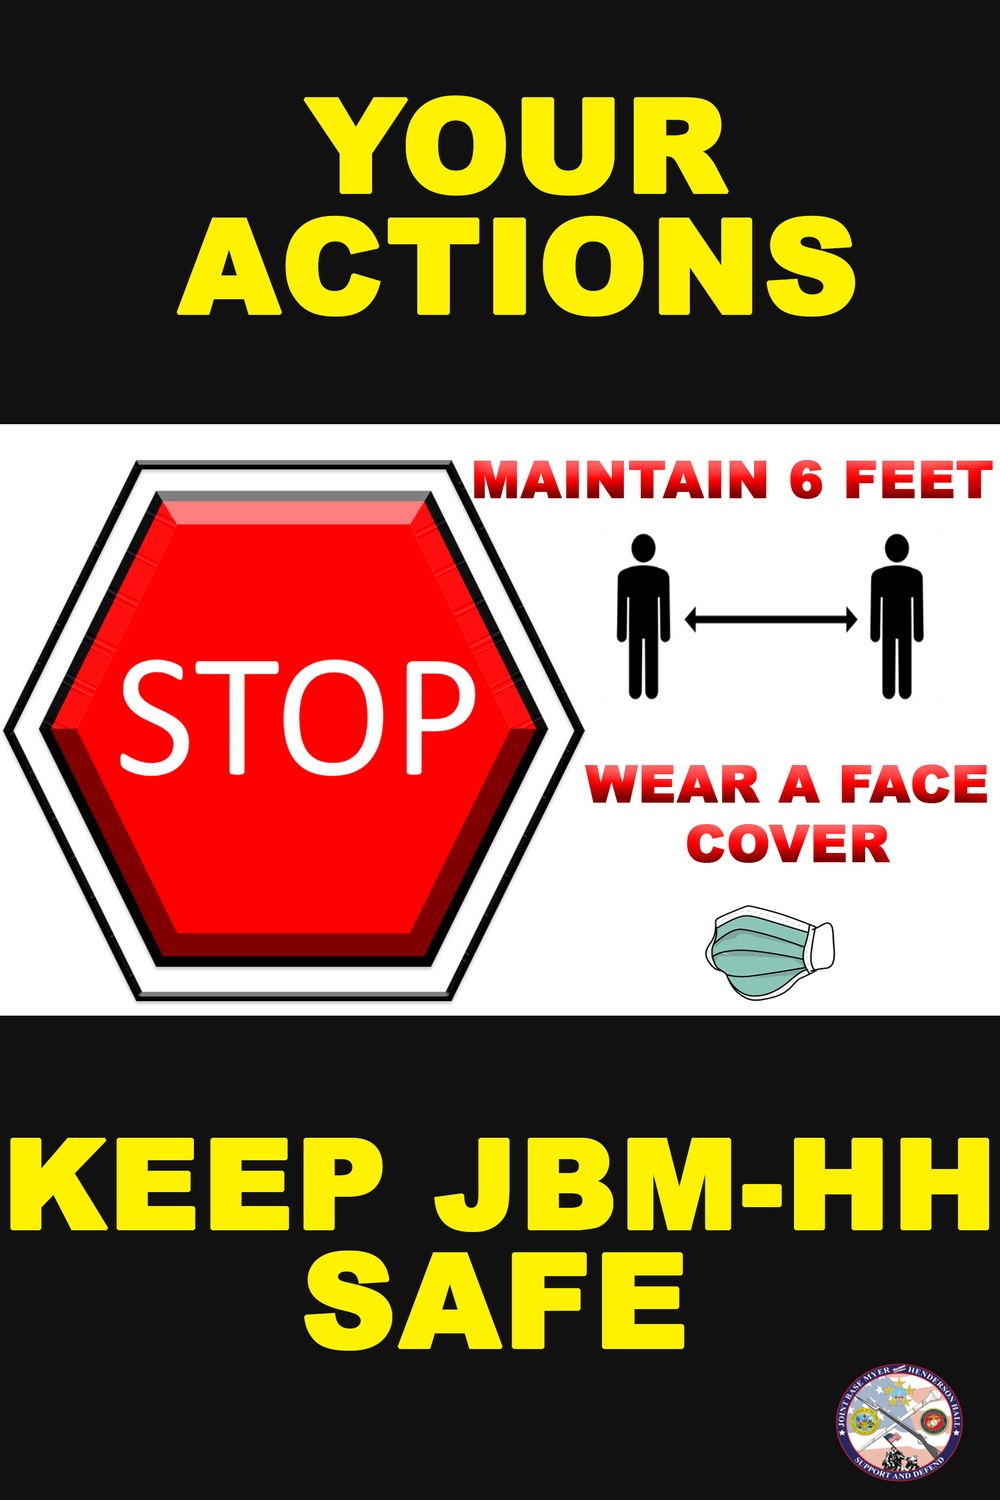 Your actions keep JBM-HH safe